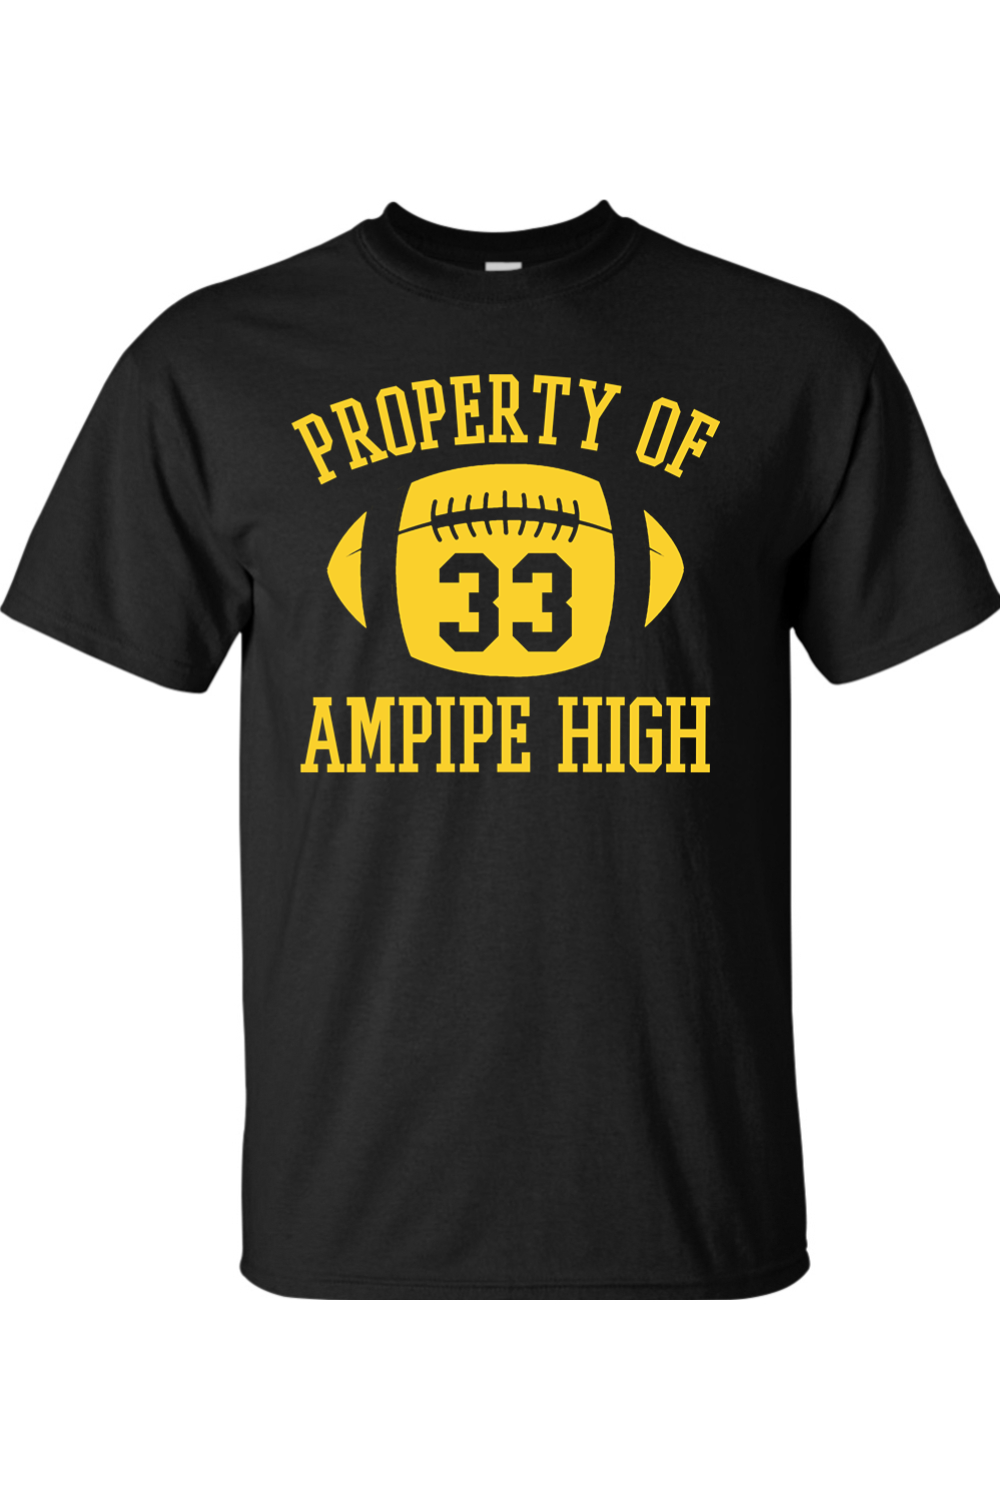 Property of Ampipe High - 4XL/5XL T-Shirt - Yinzylvania